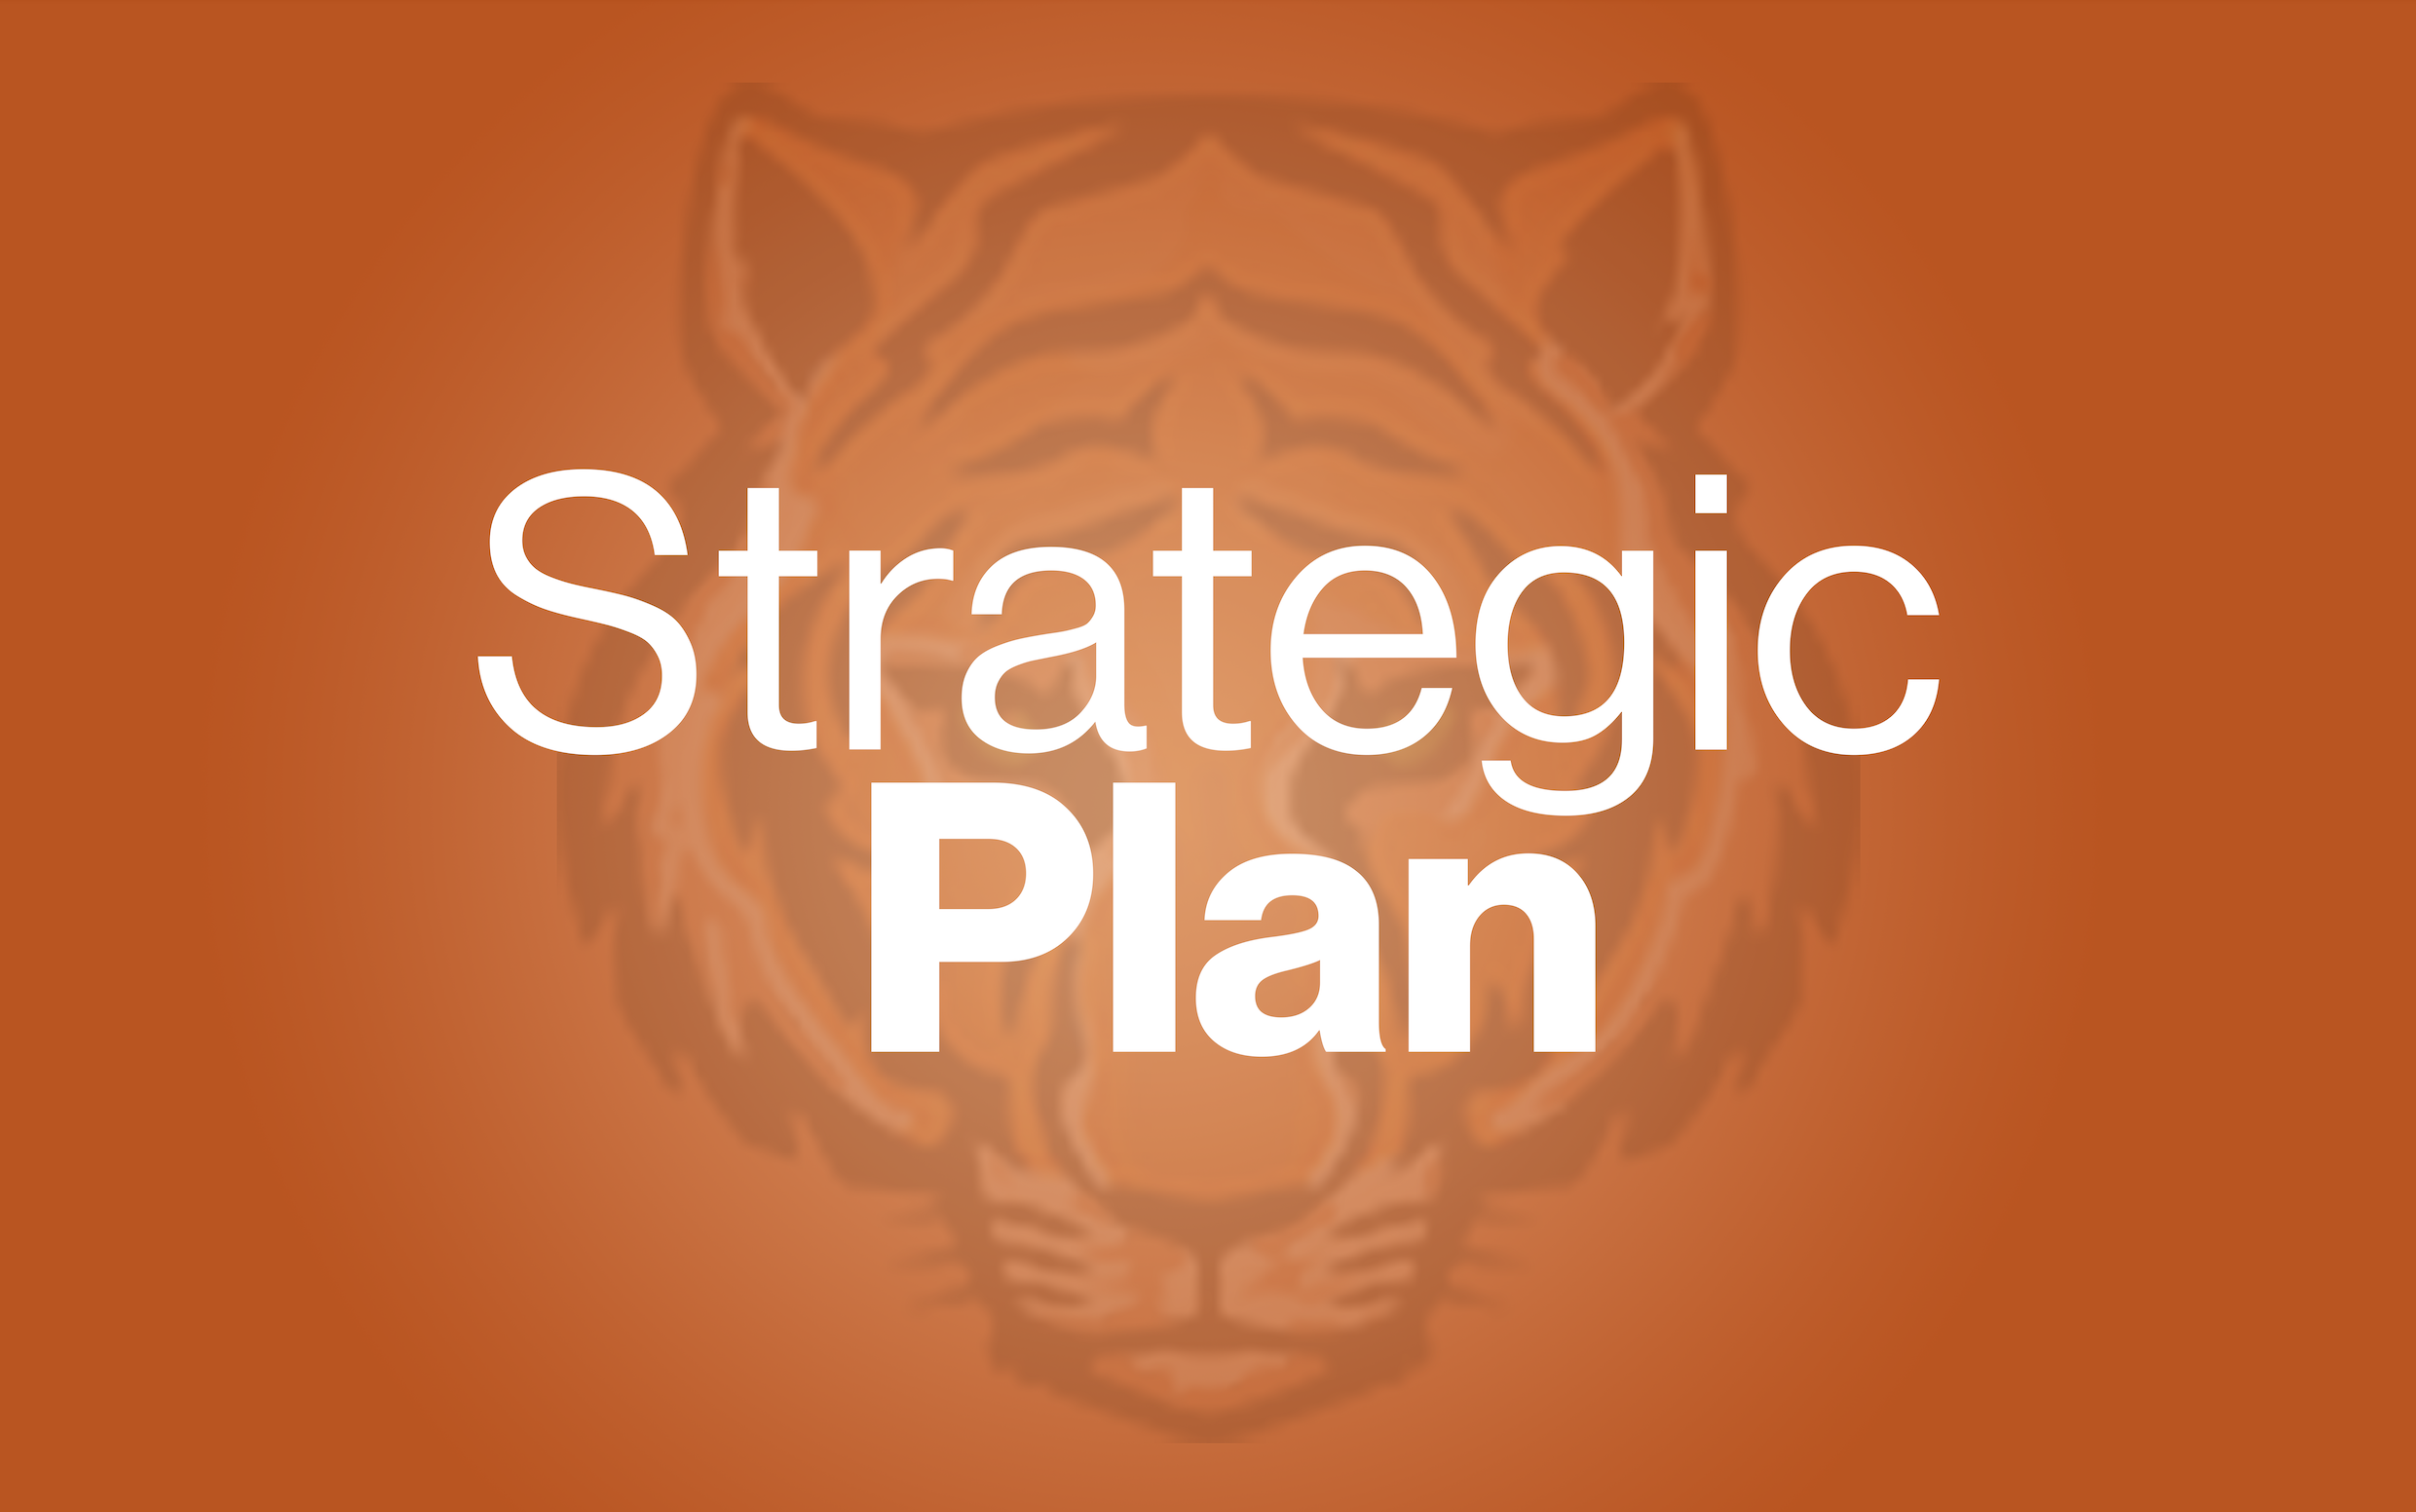 Strategic Plan with tiger logo